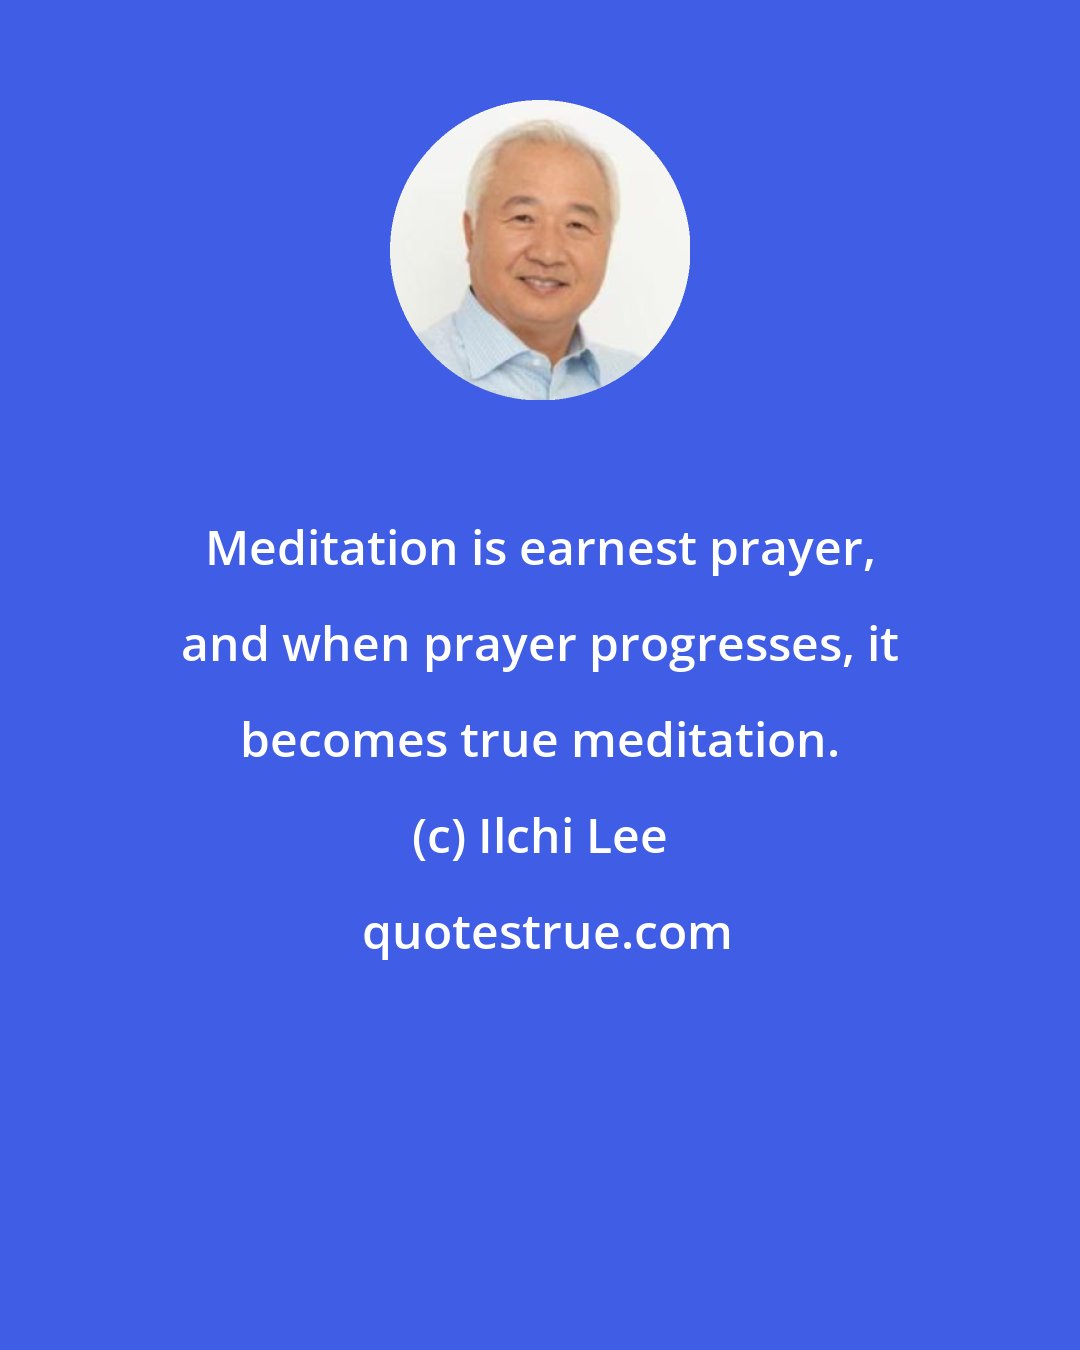 Ilchi Lee: Meditation is earnest prayer, and when prayer progresses, it becomes true meditation.